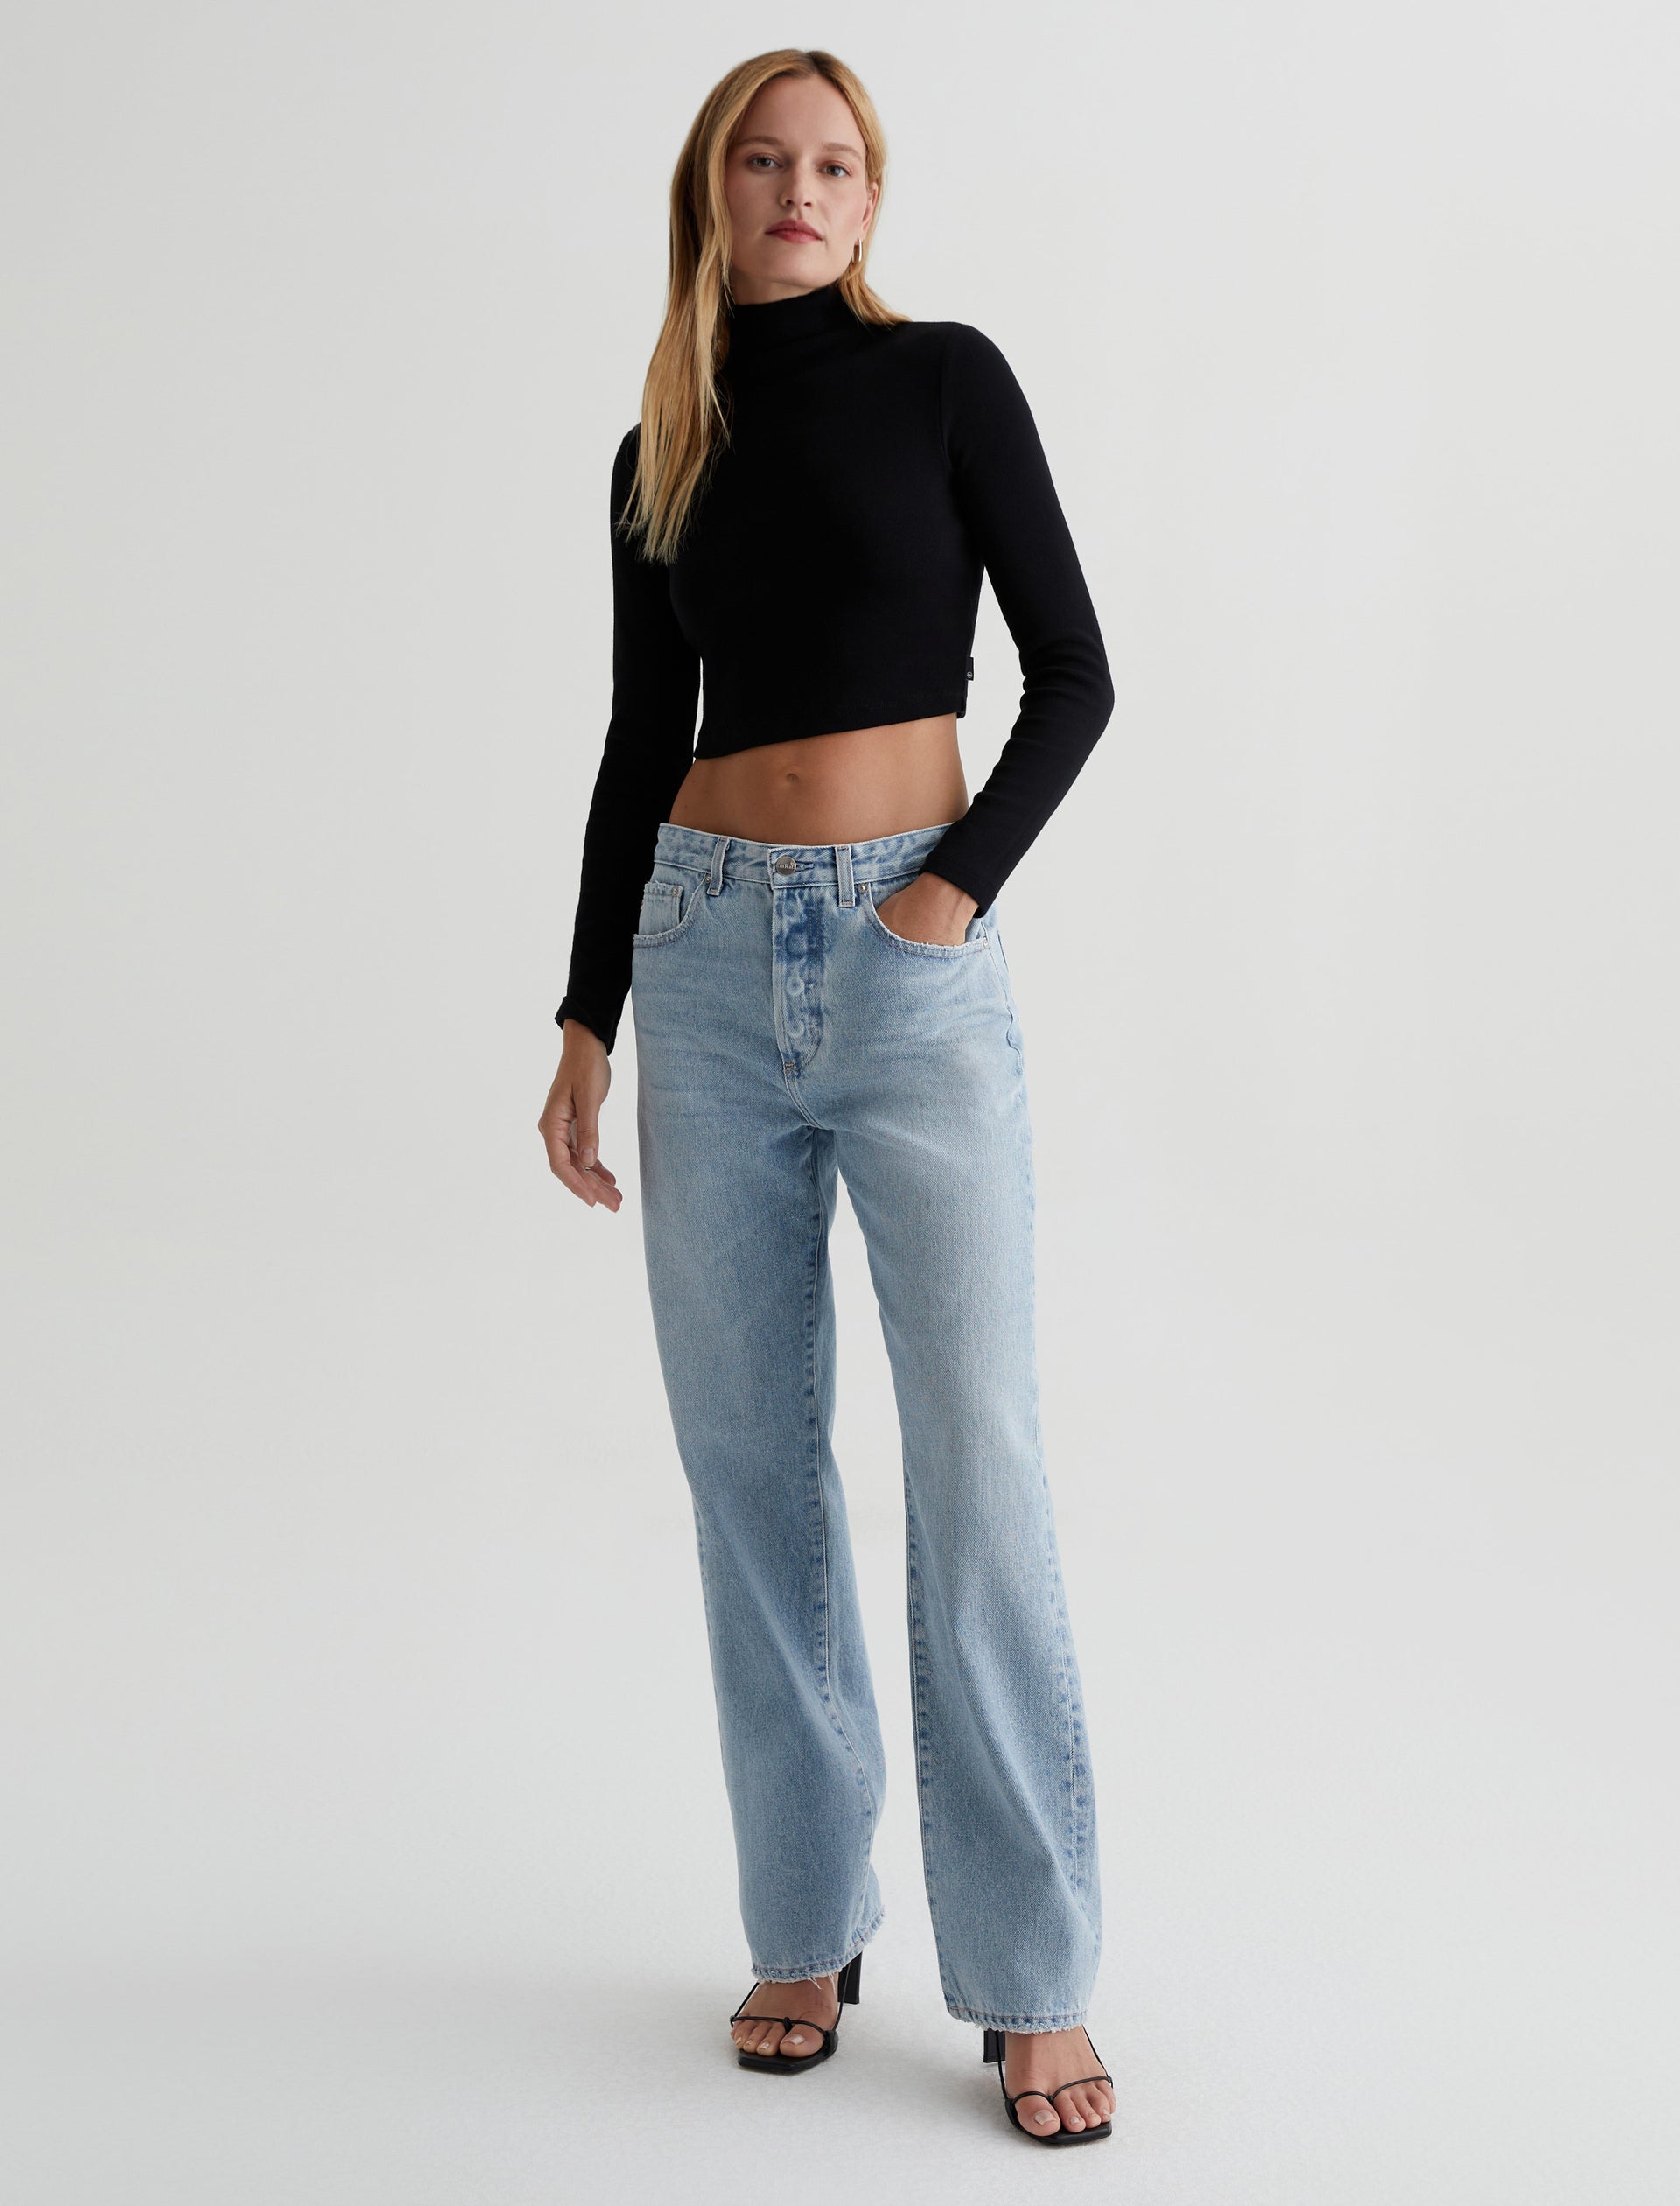 EmRata x AG Capsule Collection – AG Jeans